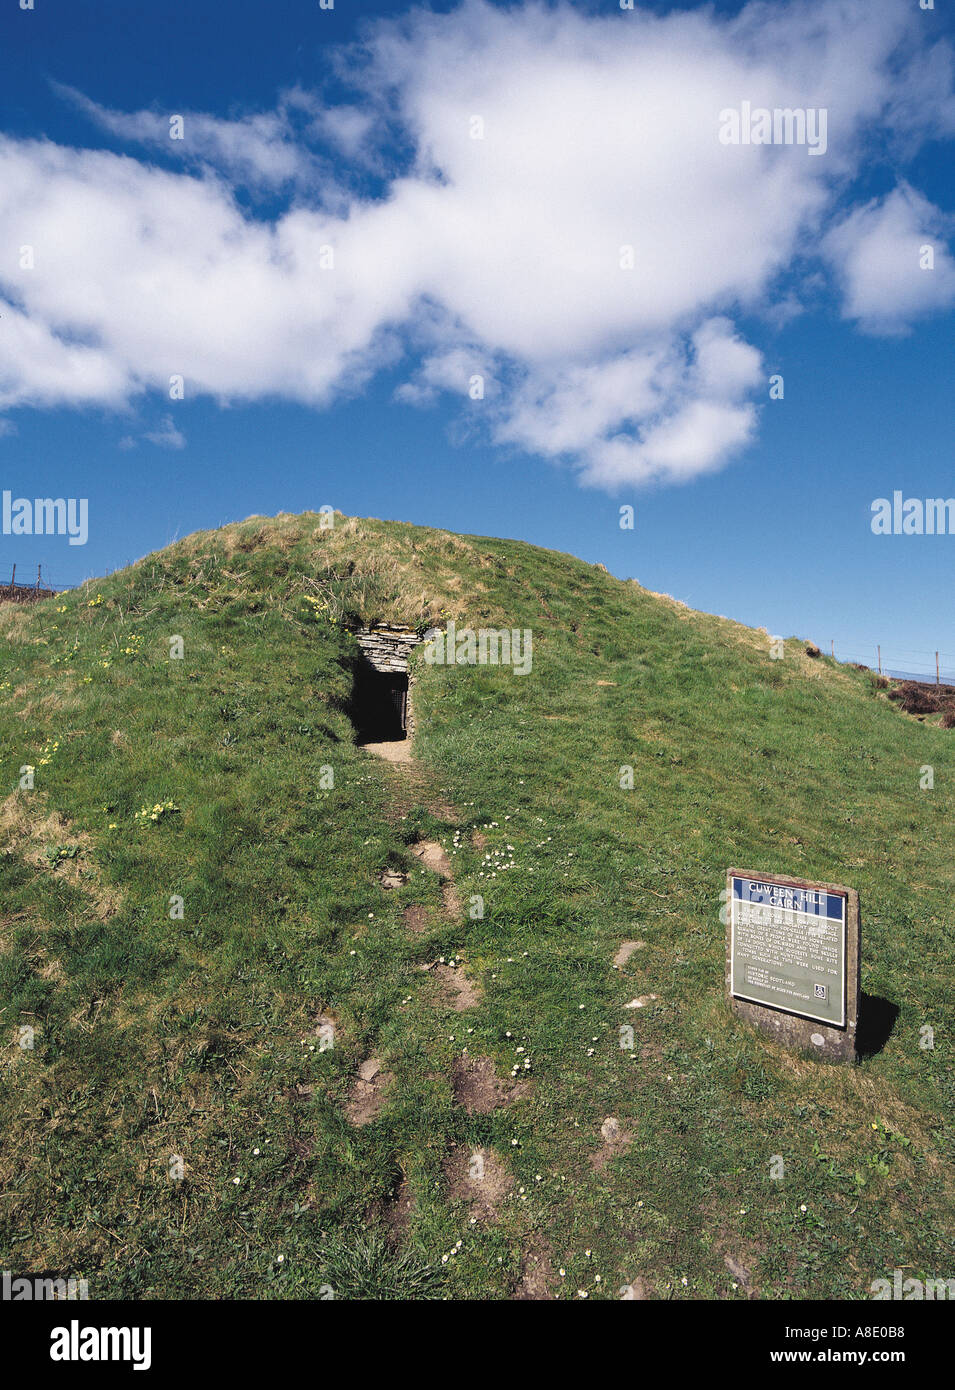 dh sepoltura Cairn CUWEEN HILL ORKNEY ISLES Mound Hill storico La Scozia firma la tomba preistorica gran bretagna Foto Stock